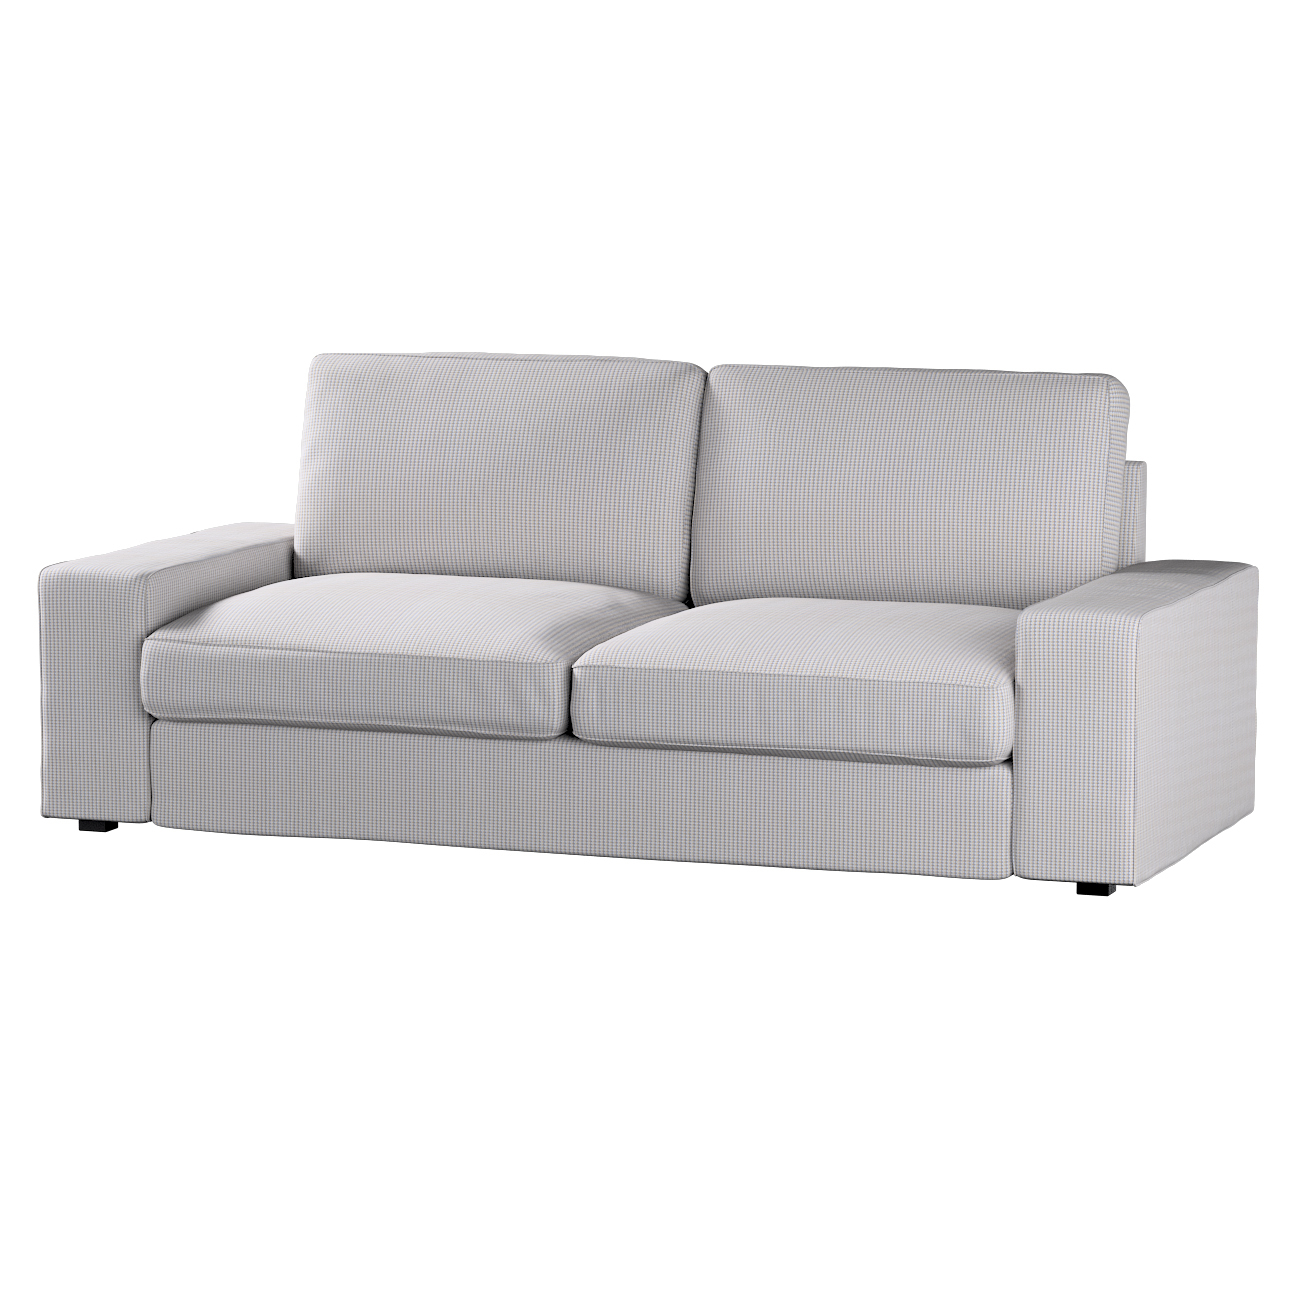 Bezug für Kivik 3-Sitzer Sofa, beige-blau, Bezug für Sofa Kivik 3-Sitzer, L günstig online kaufen